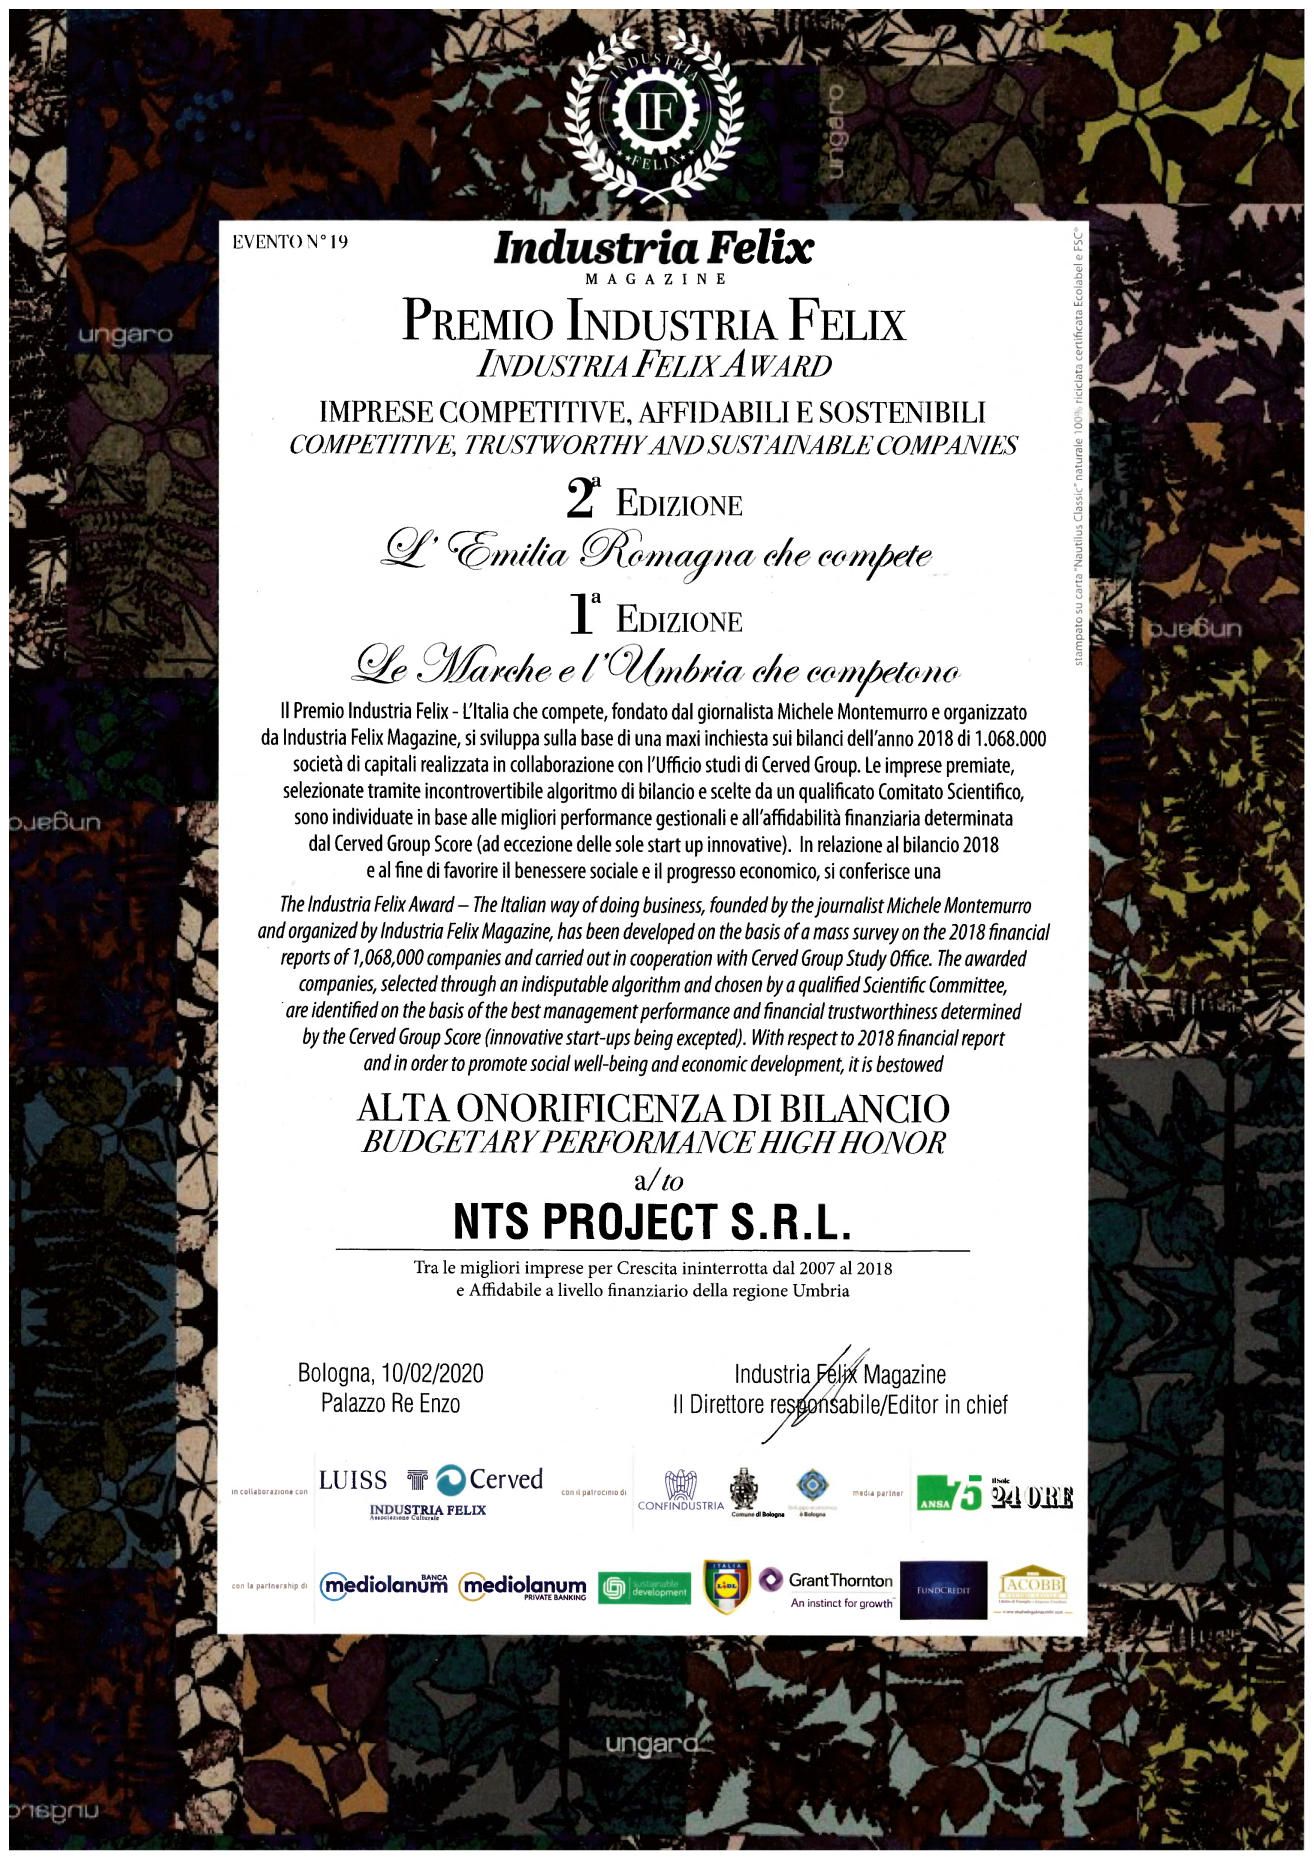 Premio Industria Felix 2020 a NTS Project